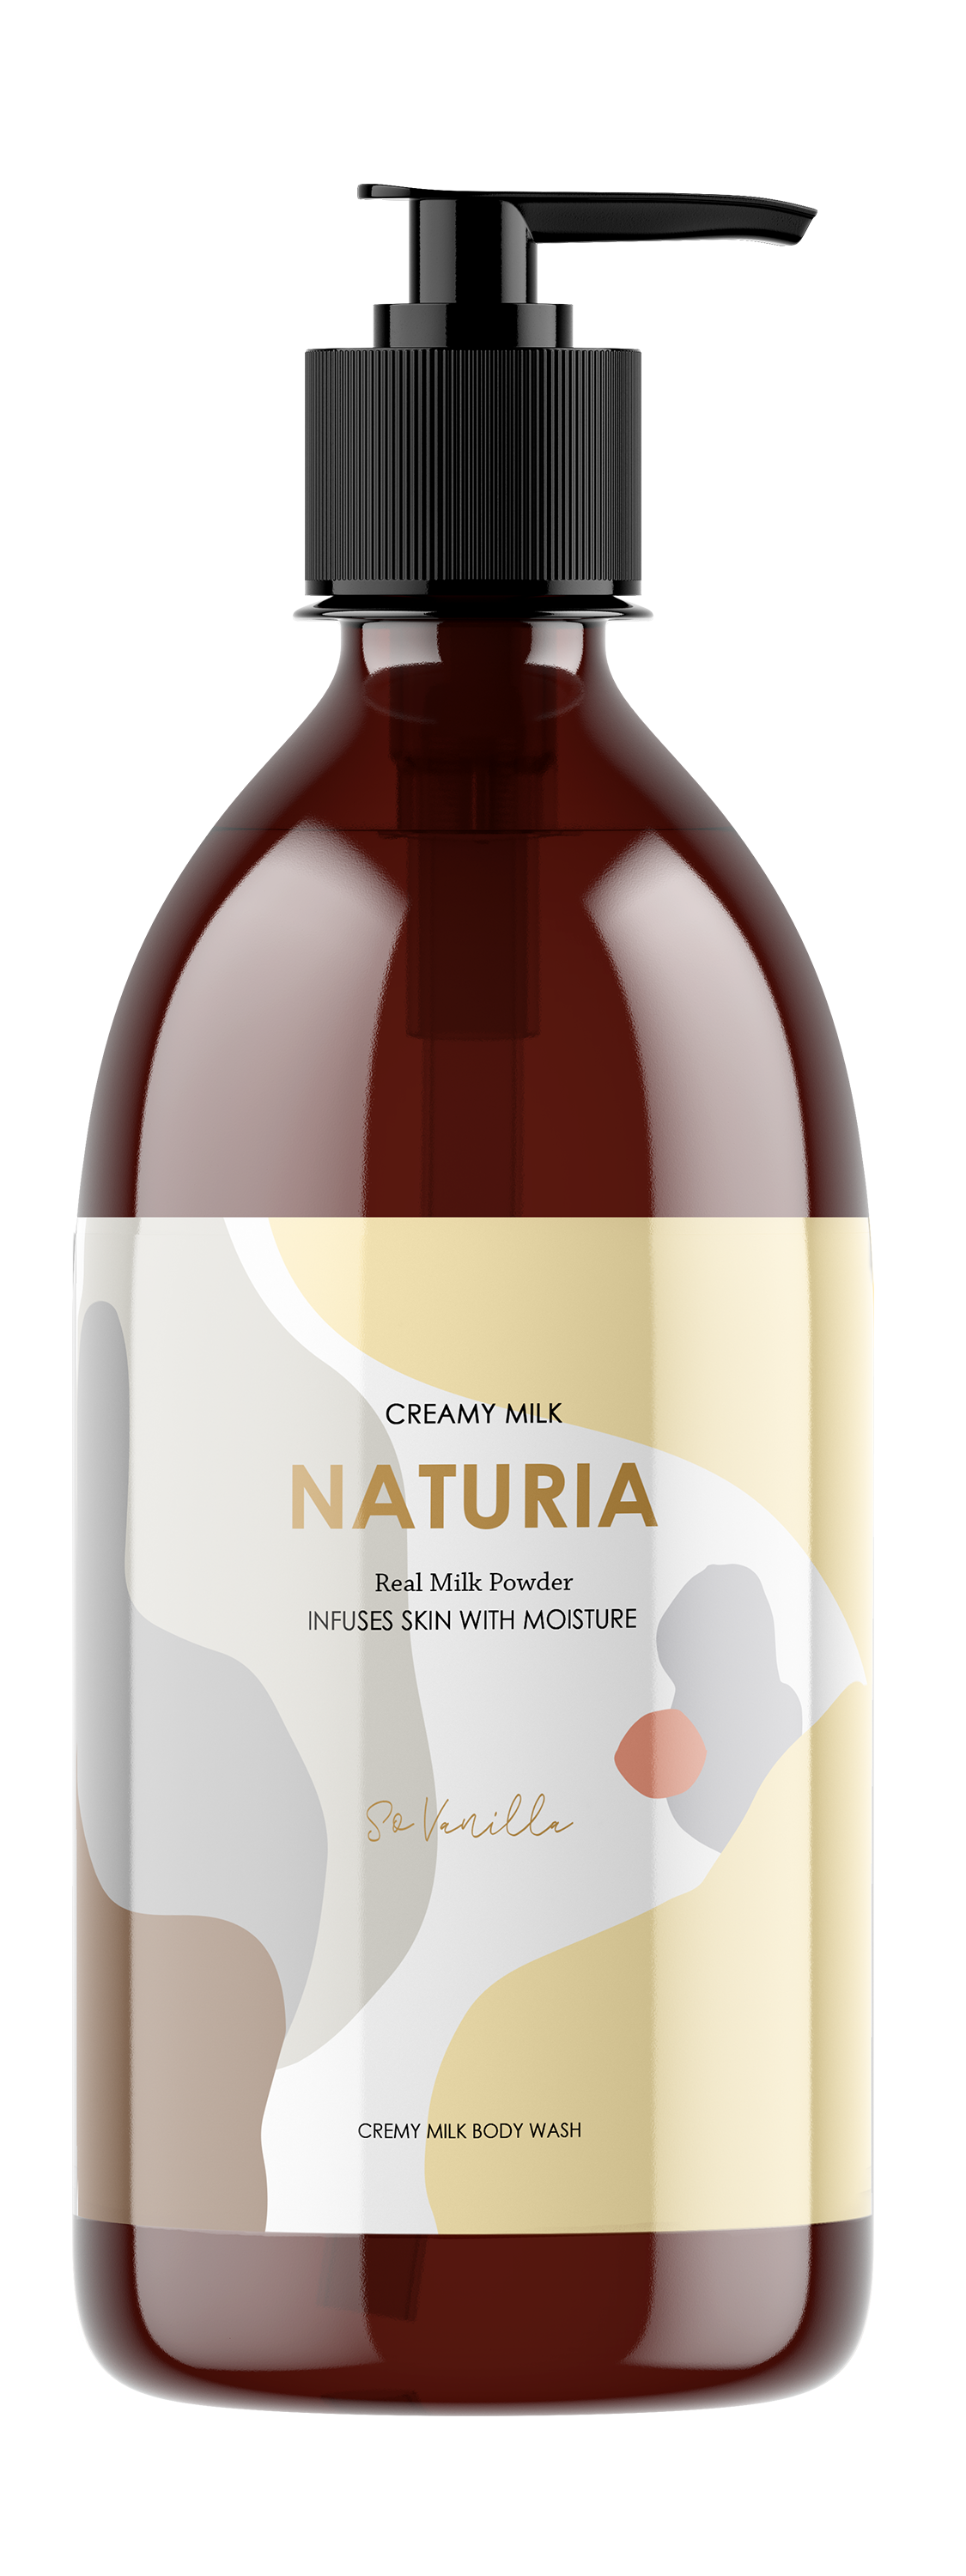 Evas Naturia Creamy Milk Body Wash - So vanilla Гель для душа c ароматом ванили, 750 мл